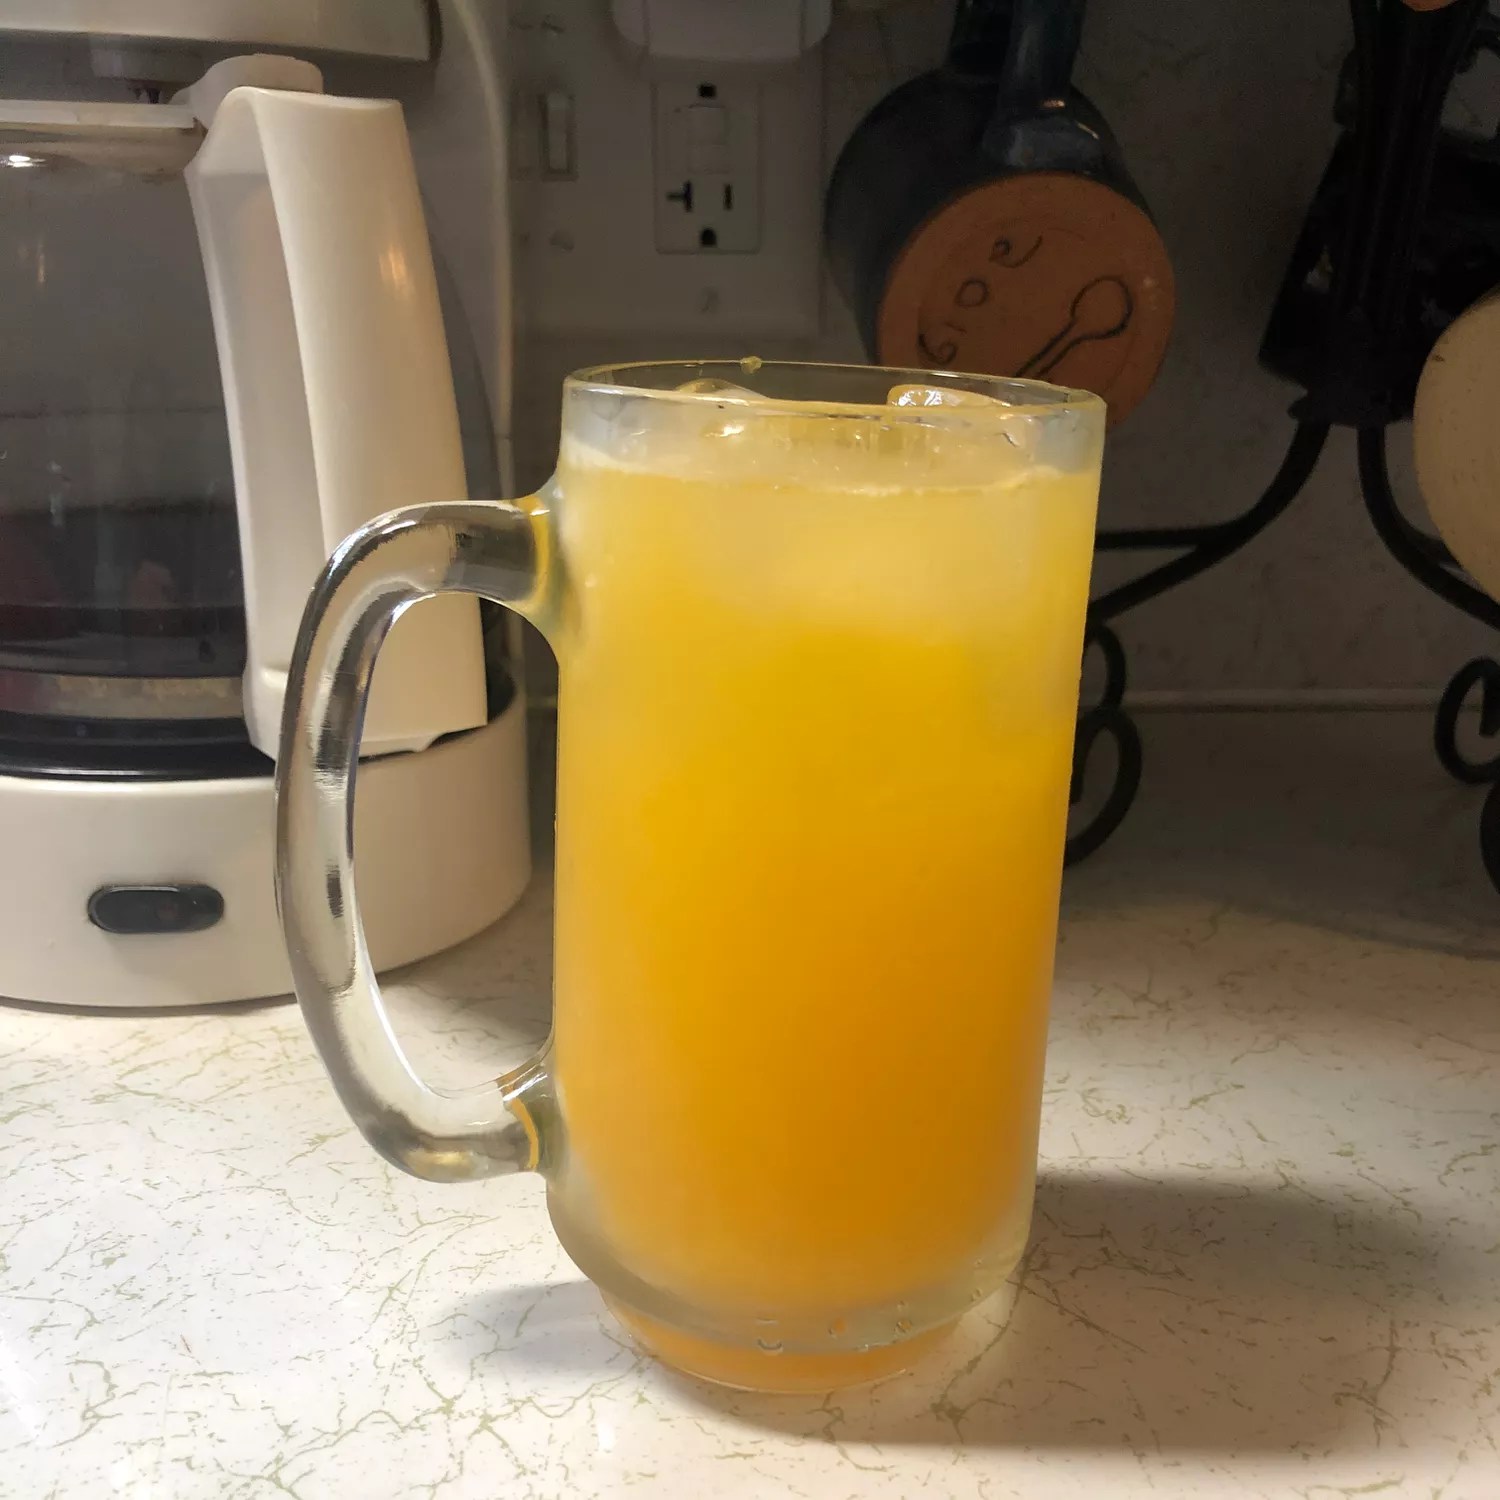 Tropical Dreams: Exquisite Orange and Vodka Libation!